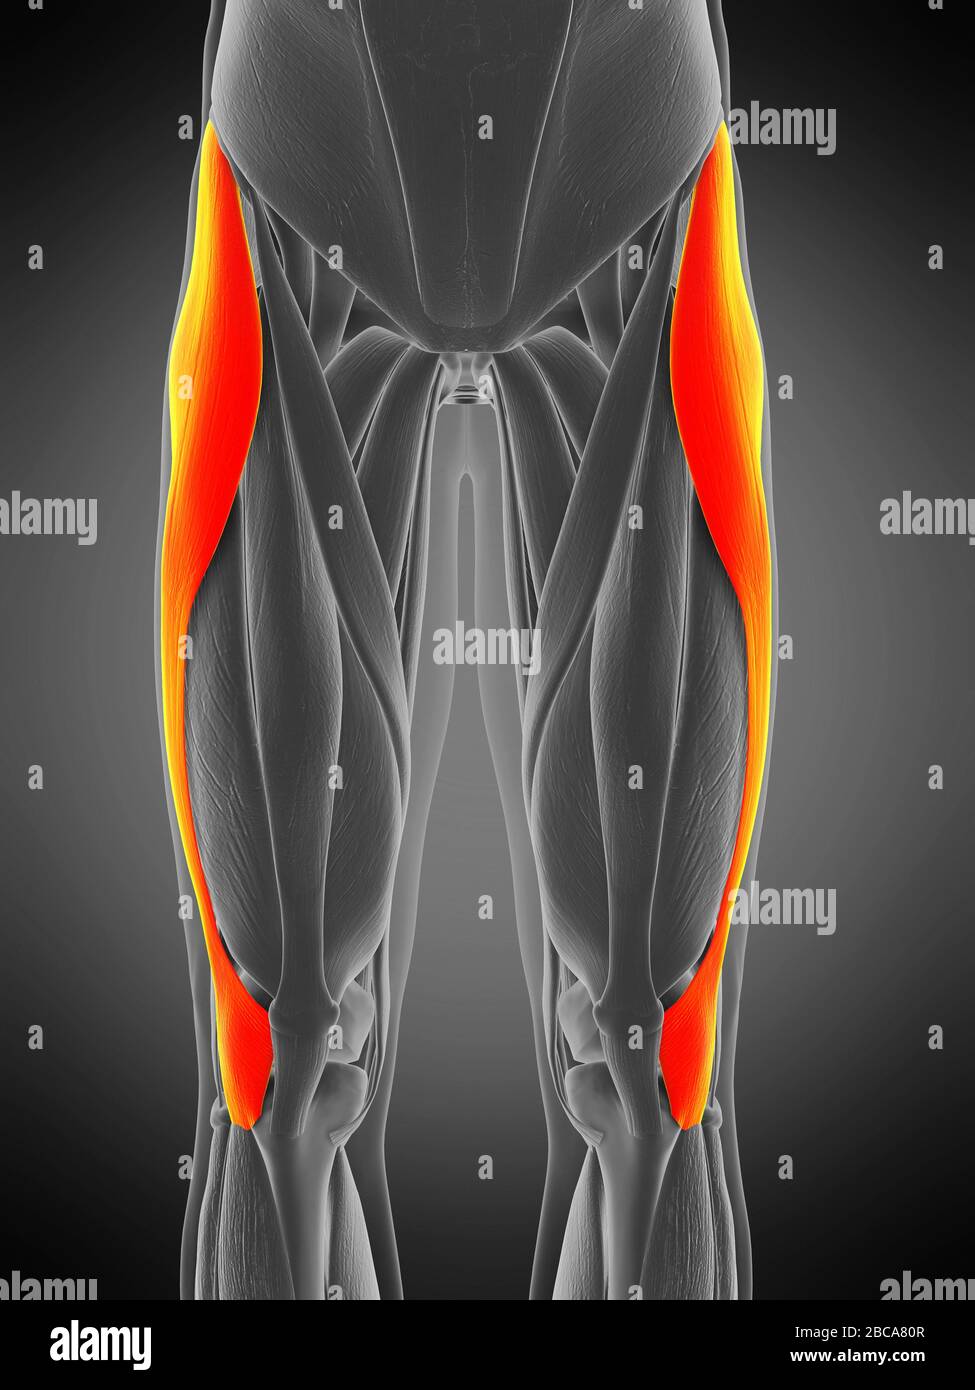 https://c8.alamy.com/comp/2BCA80R/tensor-fascia-lata-muscle-illustration-2BCA80R.jpg